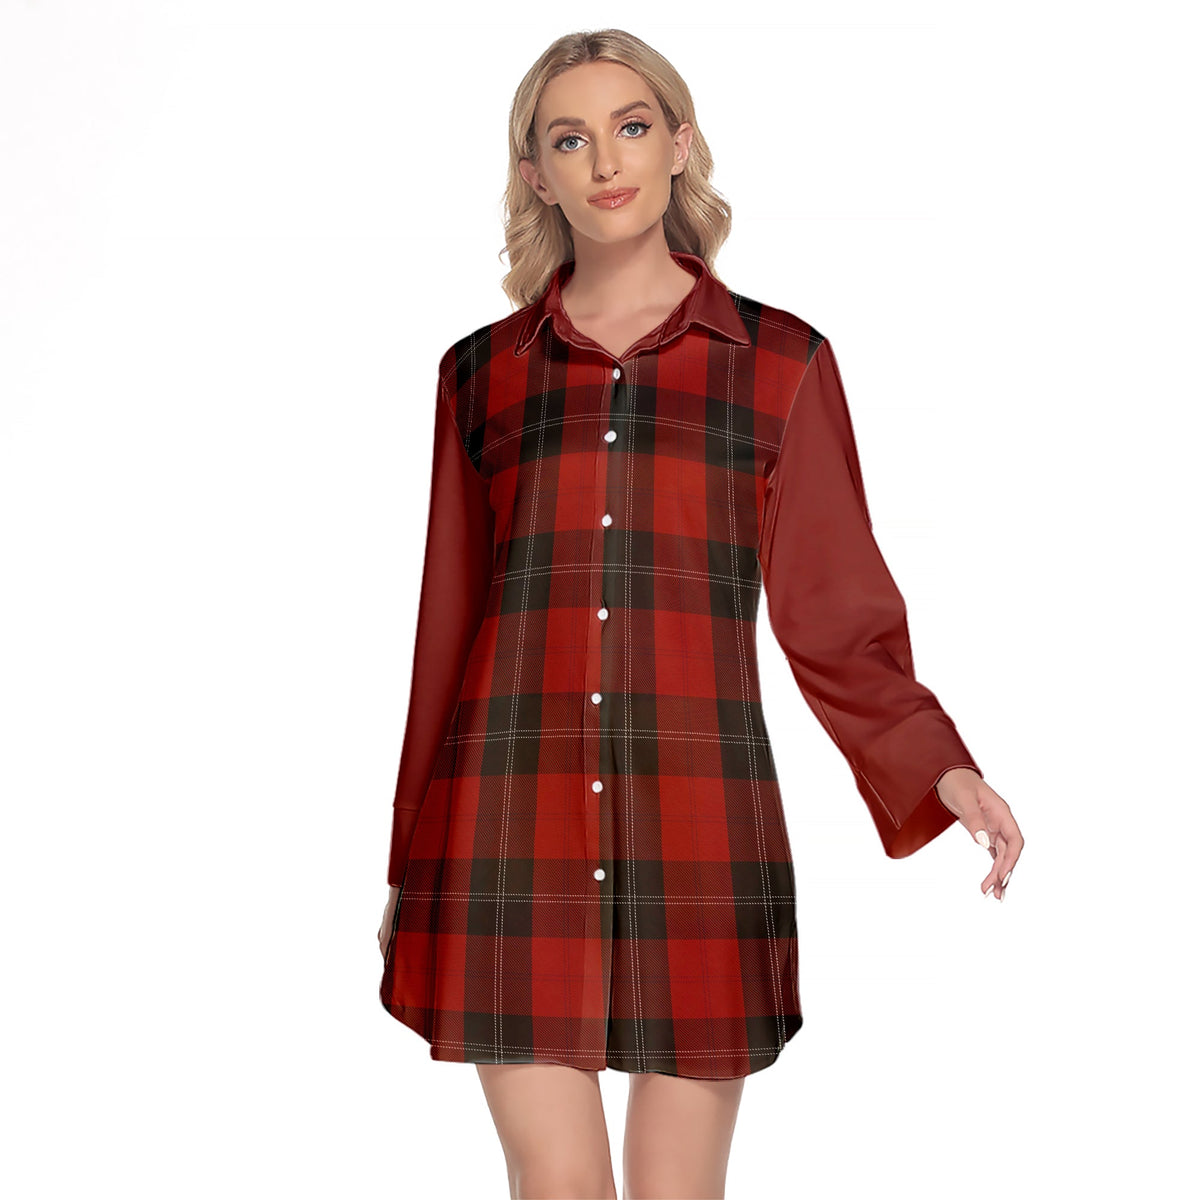 Ramsay Red Tartan Women's Lapel Shirt Dress With Long Sleeve